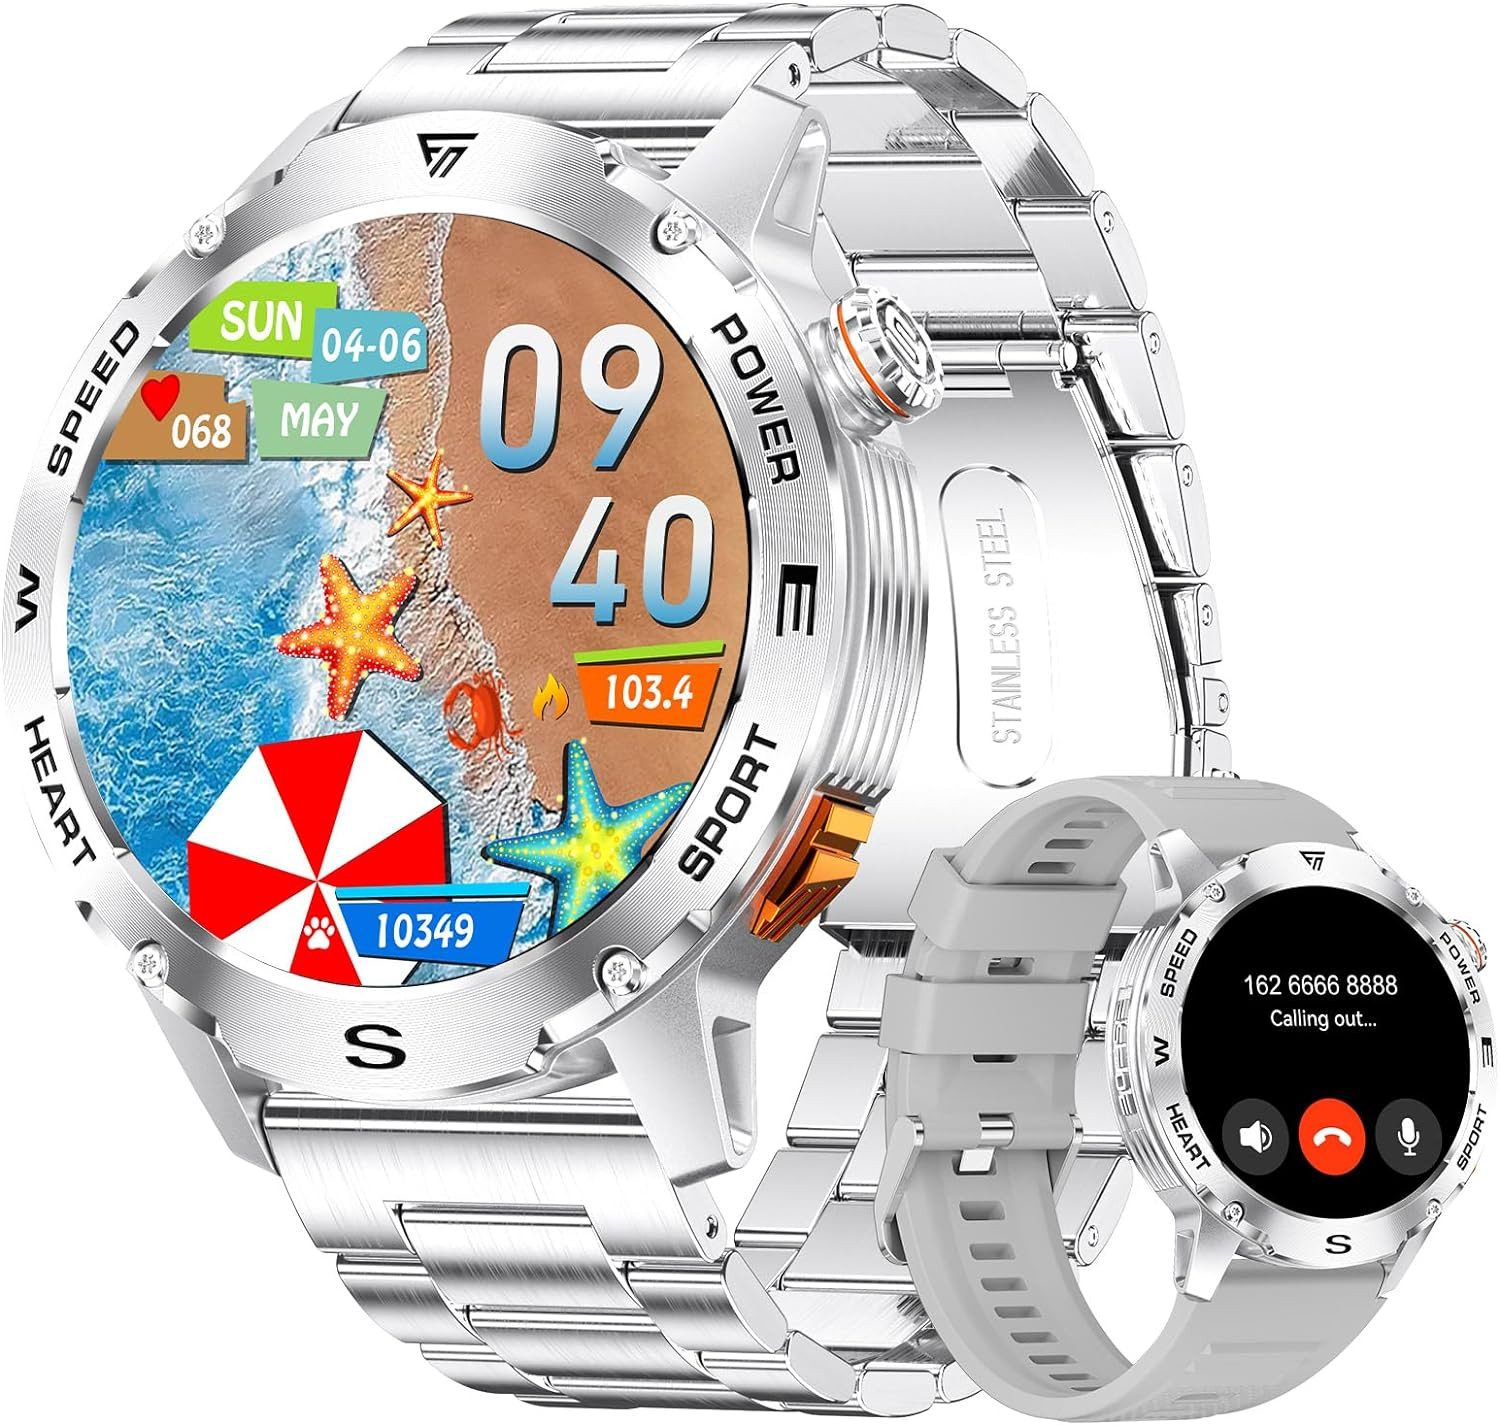 FoxBox Herren's Telefonfunktion 460mAh Fitness-Tracker Smartwatch (1,43 Zoll, Android/iOS), mit 100+Sportmodi Herzfrequenzmonitor Schlafmonitor 3ATM Wasserdicht